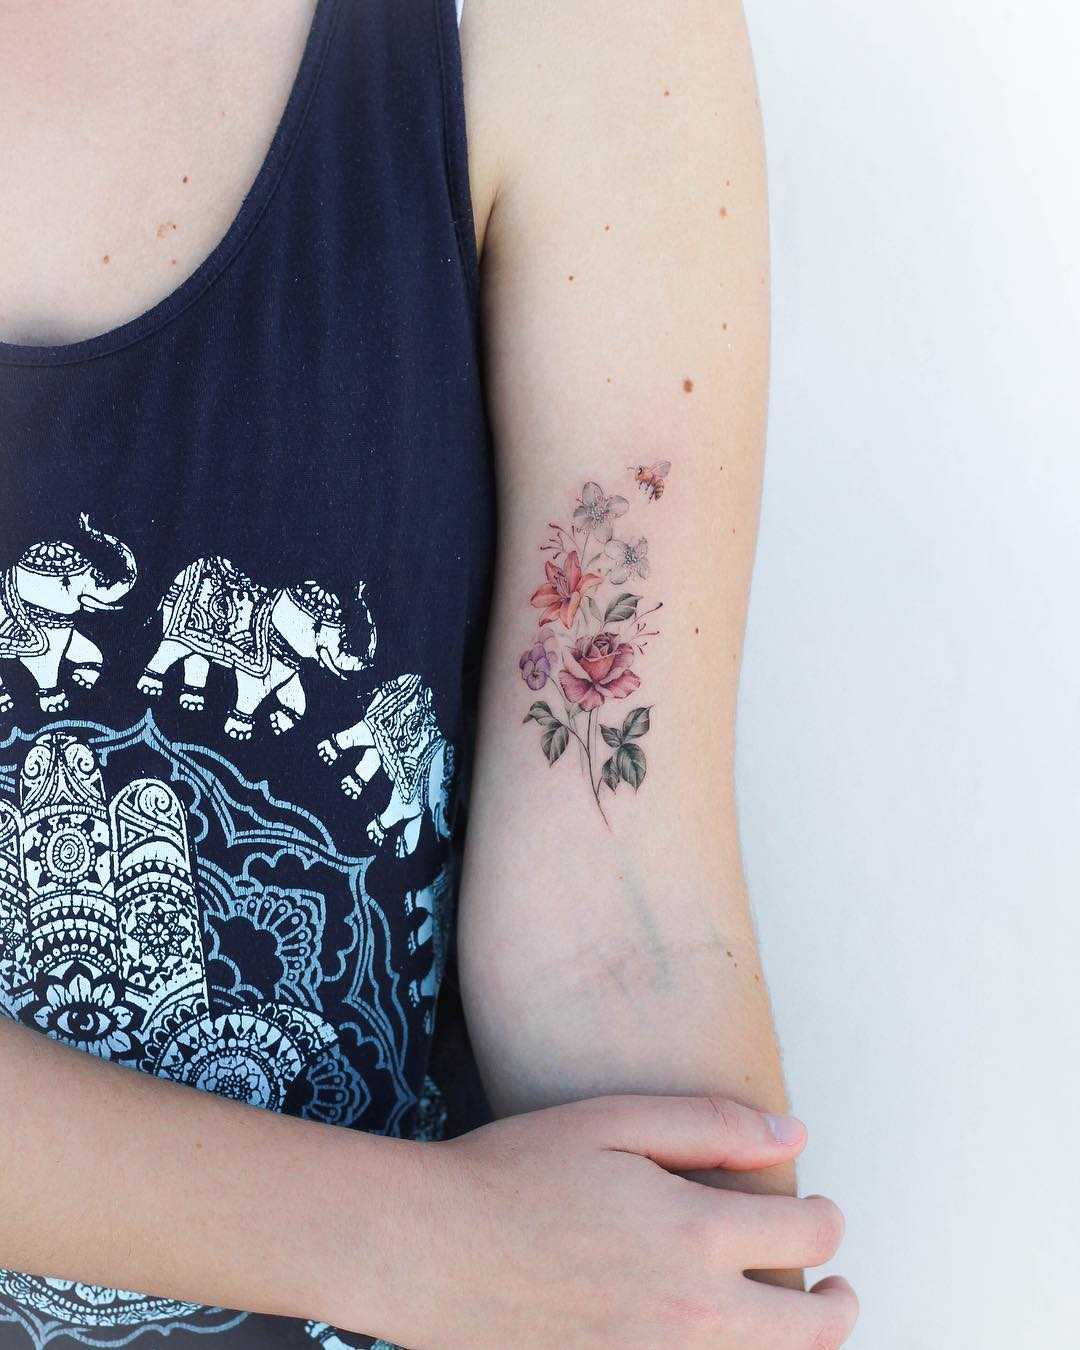 Delicate flower bouquet tattoo